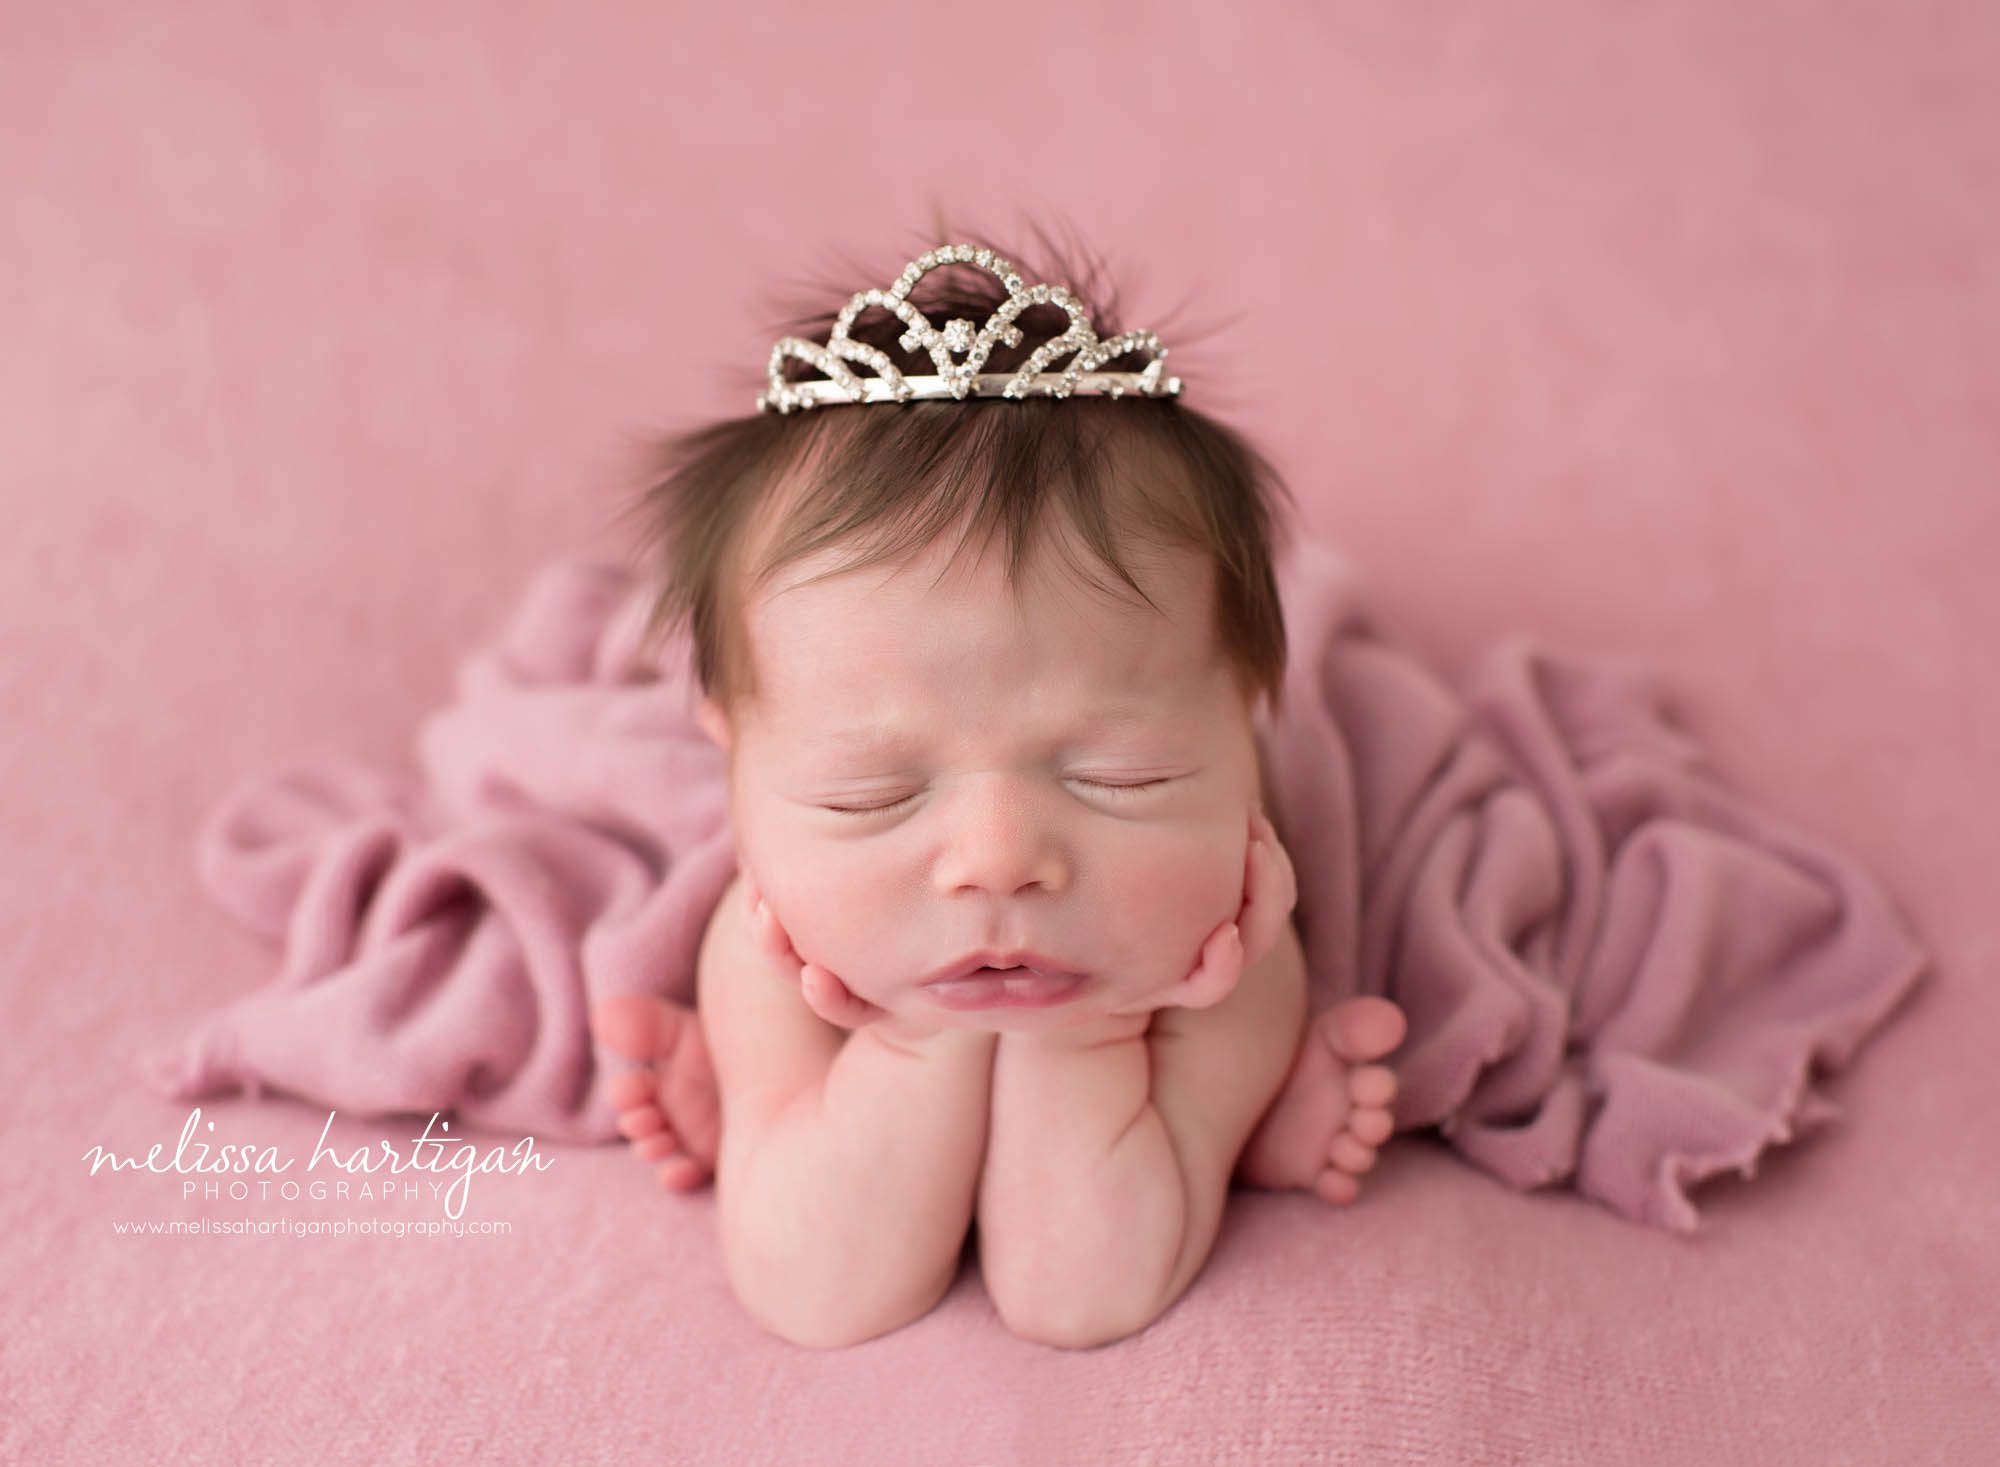 newborn baby girl posed froggy pose wearing crown on head